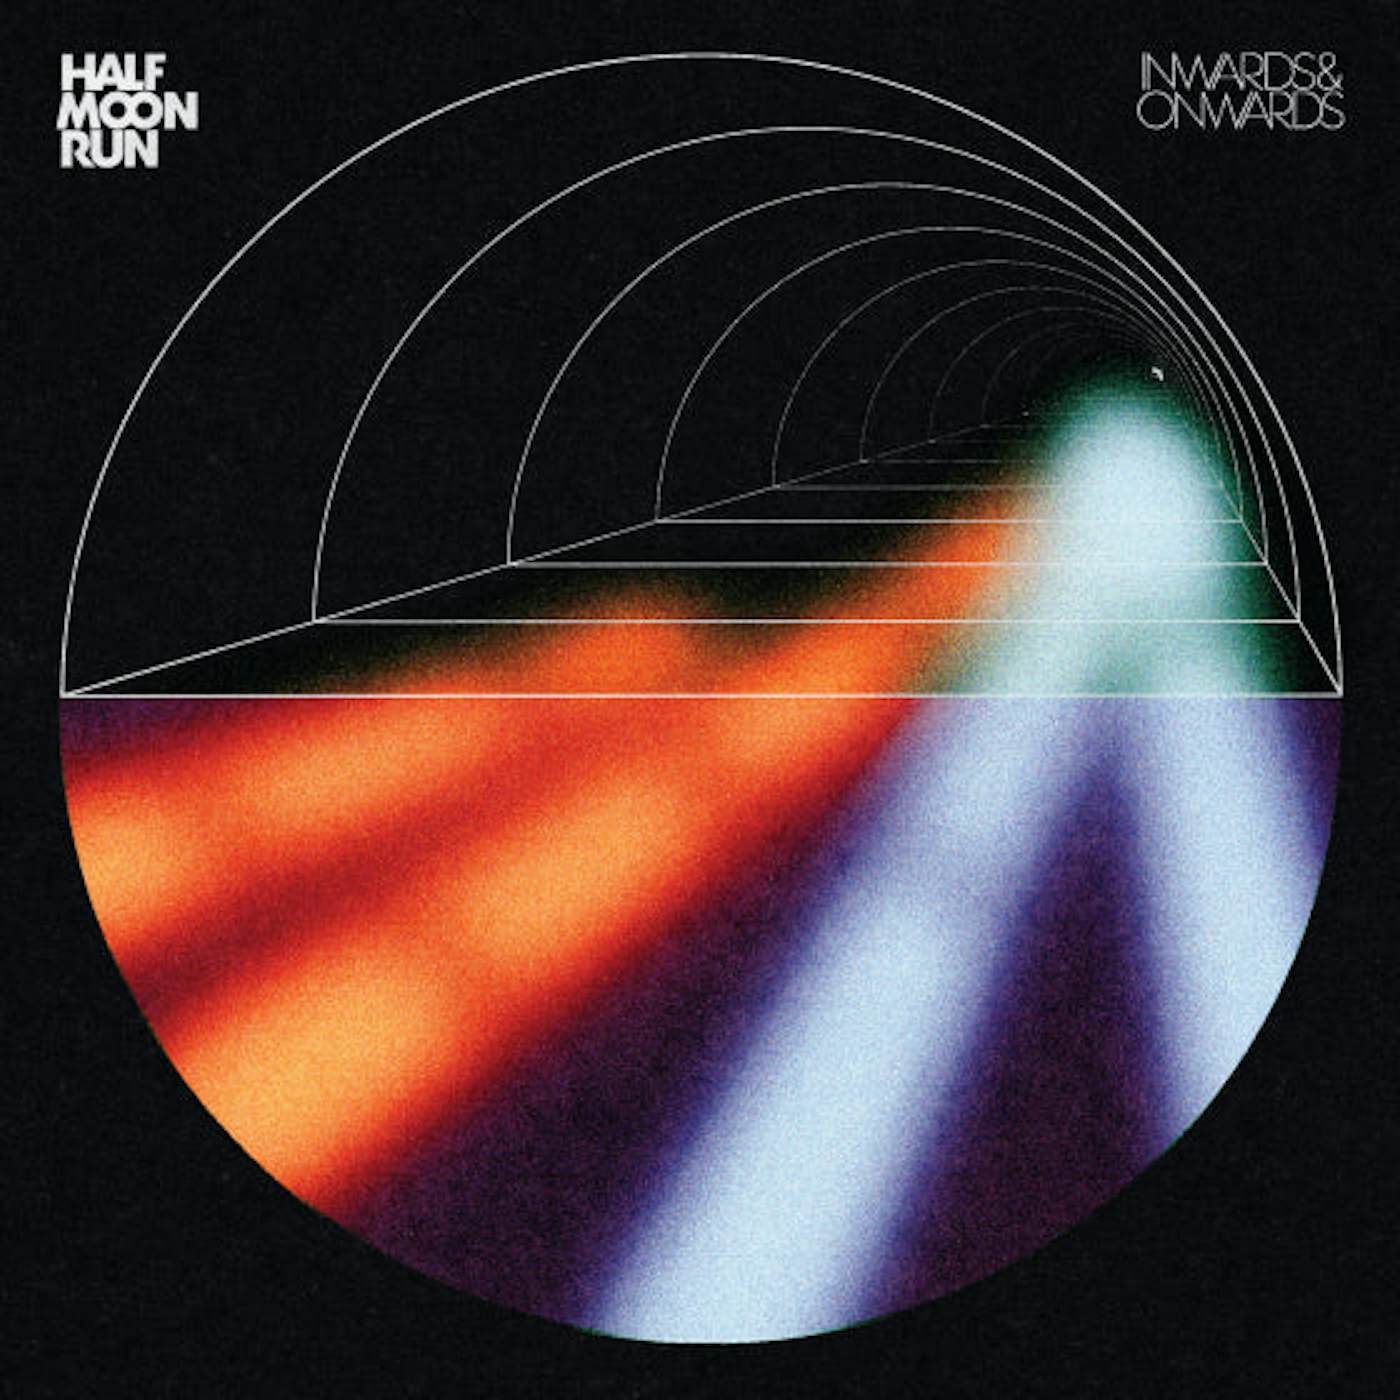 Half Moon Run Inwards & Onwards Vinyl Record